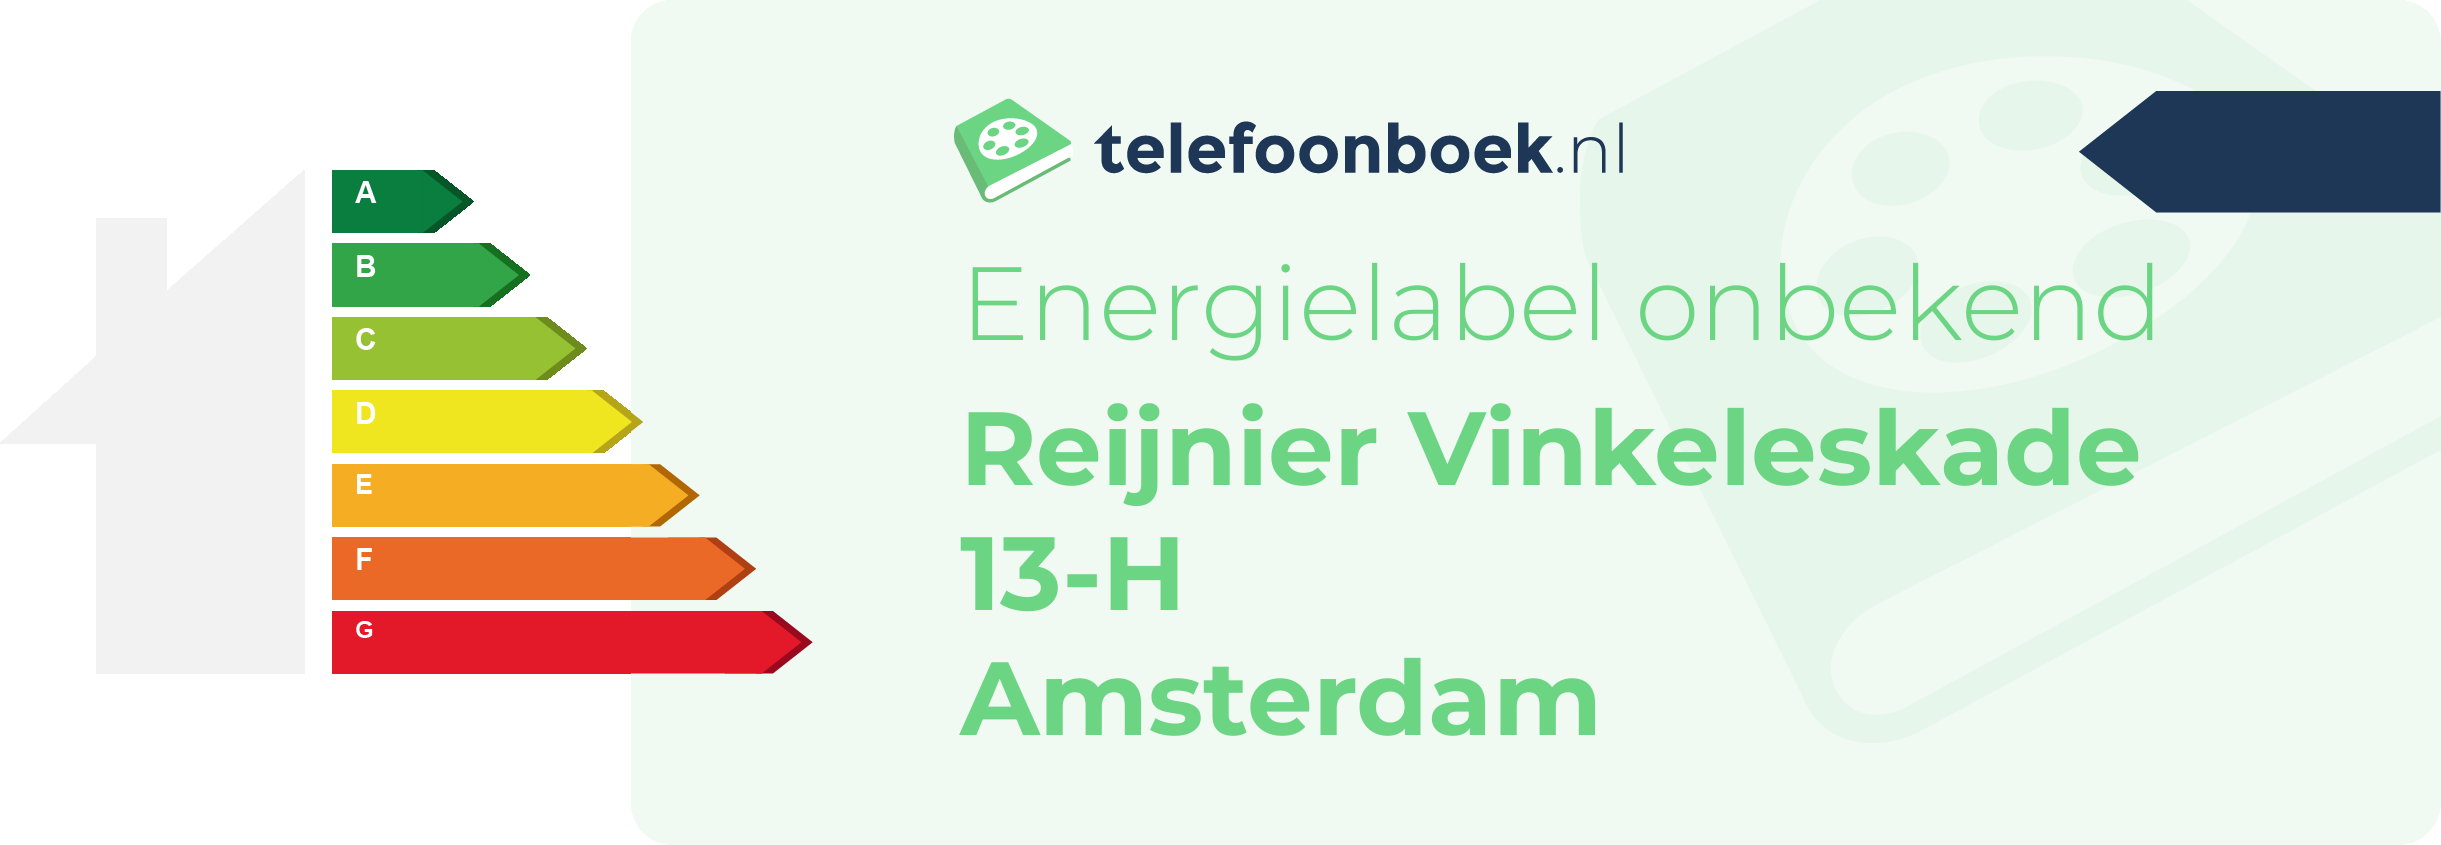 Energielabel Reijnier Vinkeleskade 13-H Amsterdam